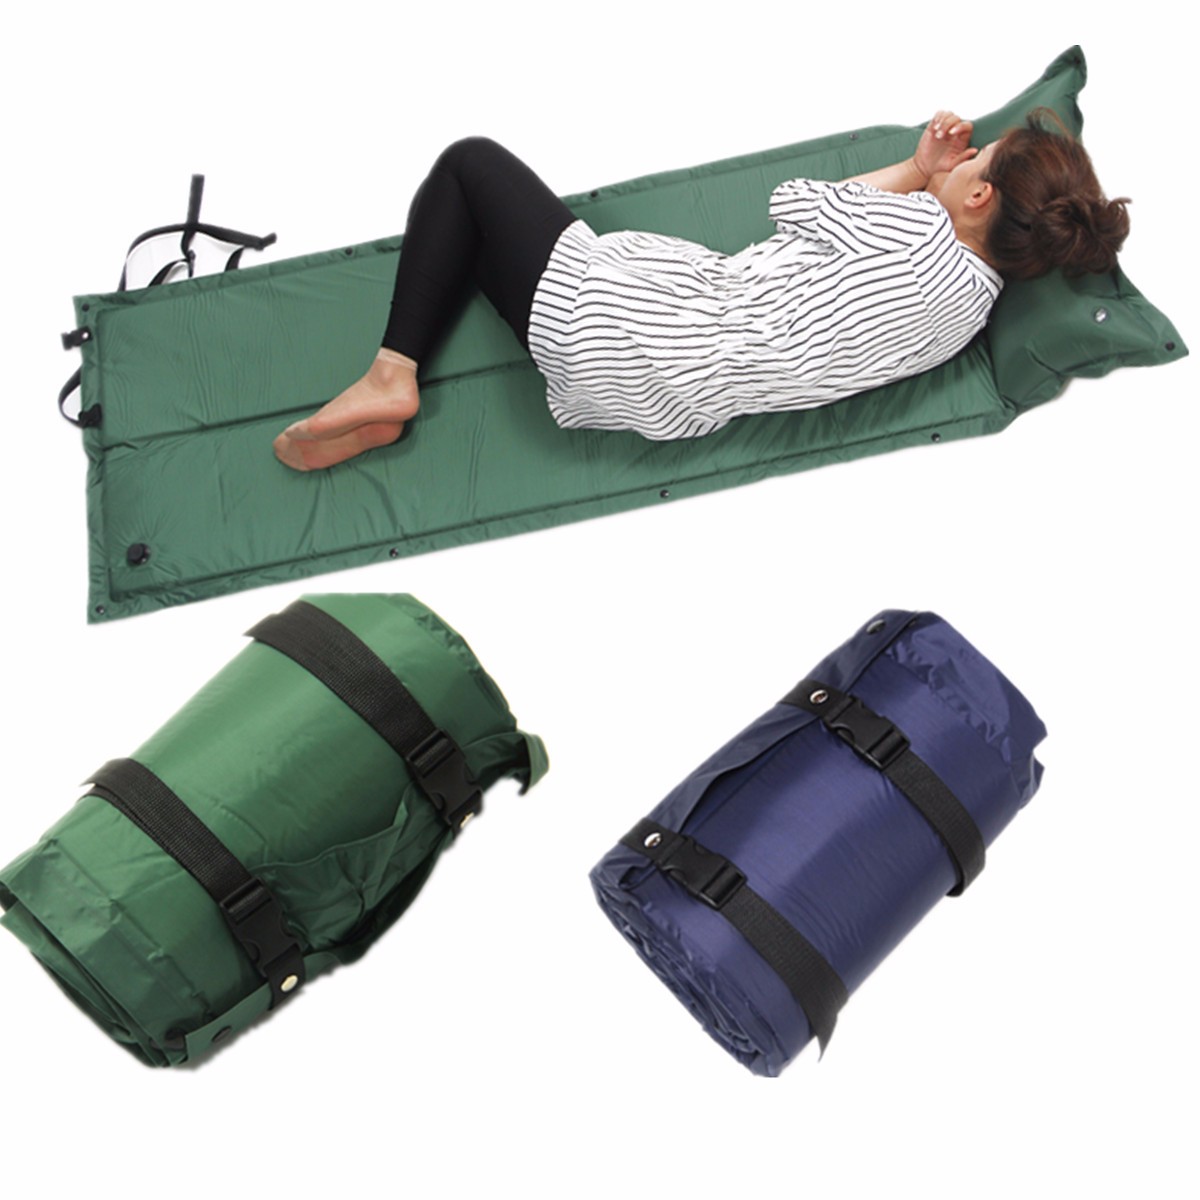 

IPRee® 183x60x2.5cm Самонадувающийся воздушный матрац Кемпинг Влагонепроницаемый коврик для спального мешка